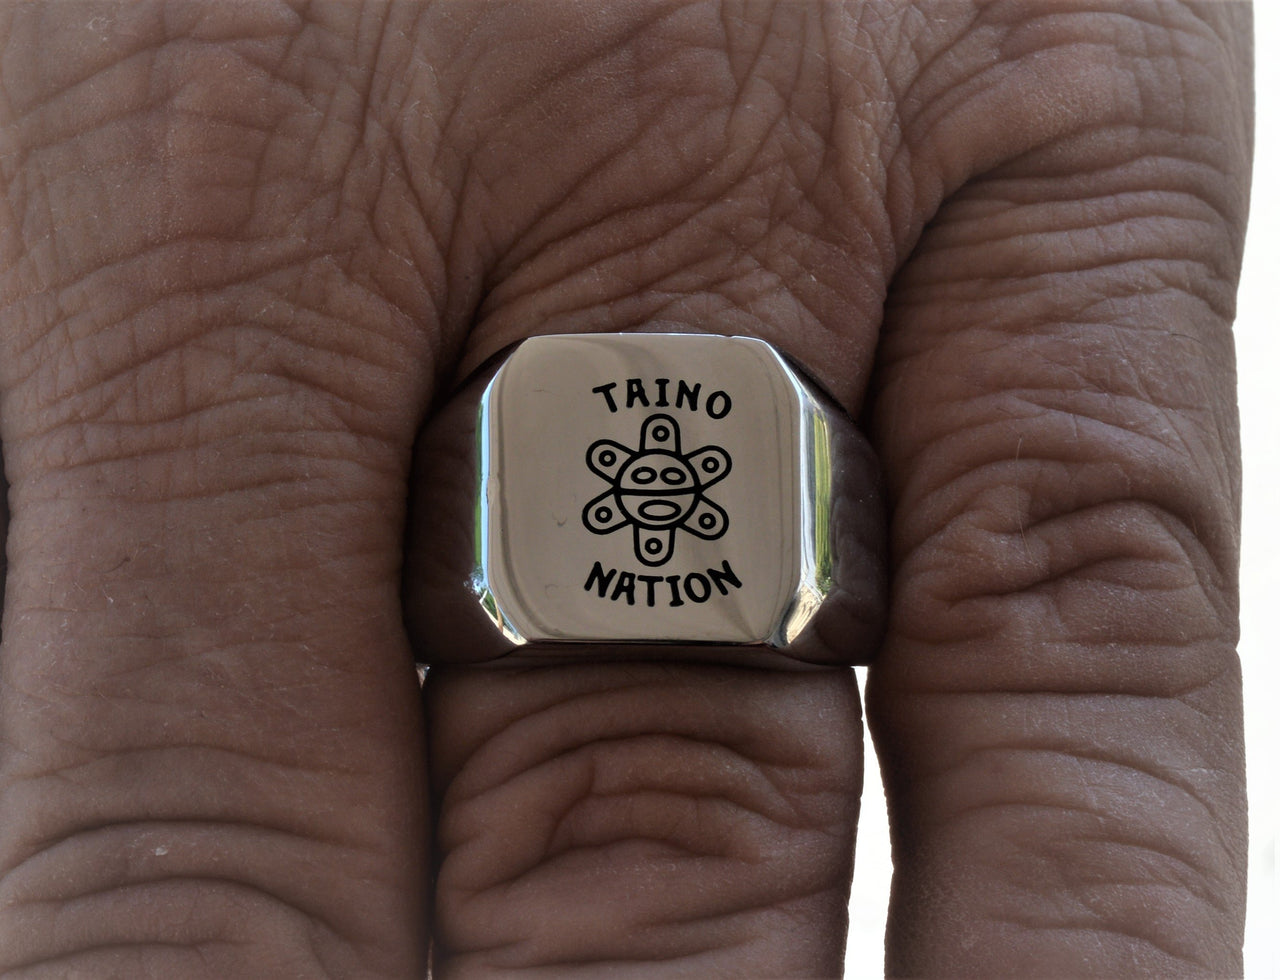 Taino Nation Sun God Ring